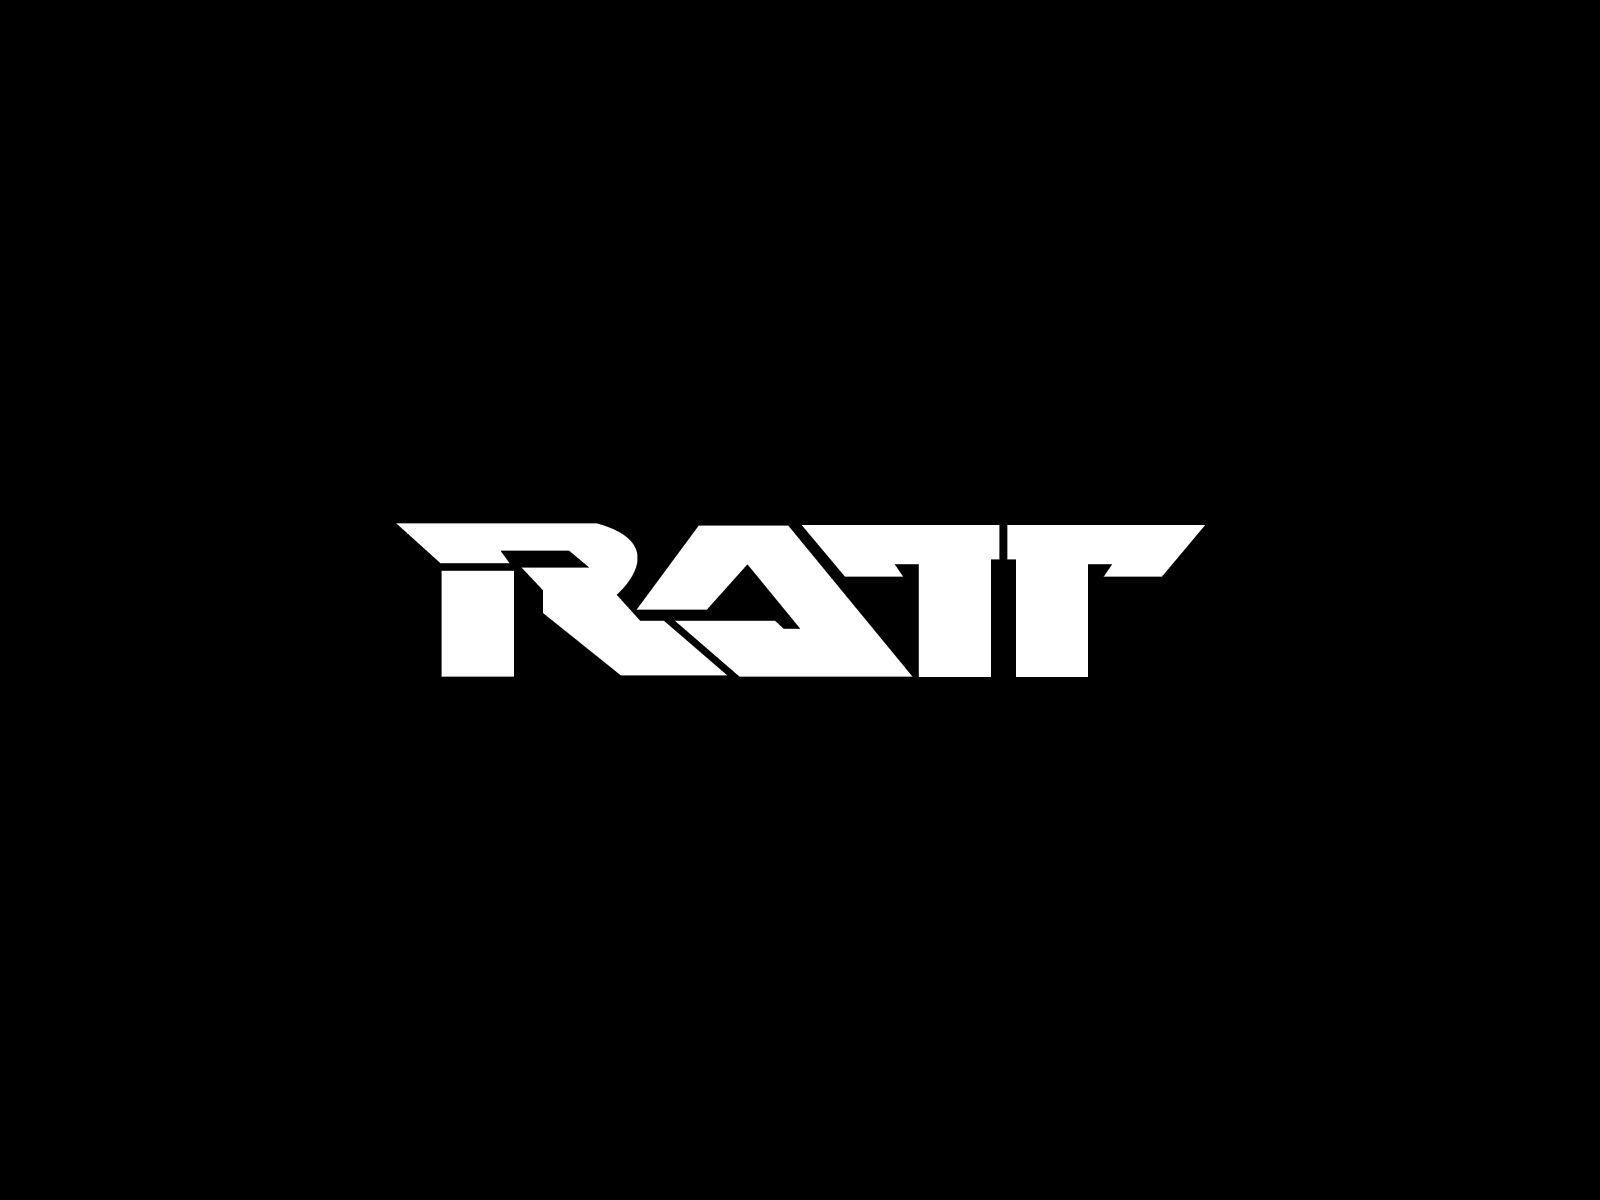 Ratt Logo - Ratt band logo. Band Logos. Band logos, Band, Music